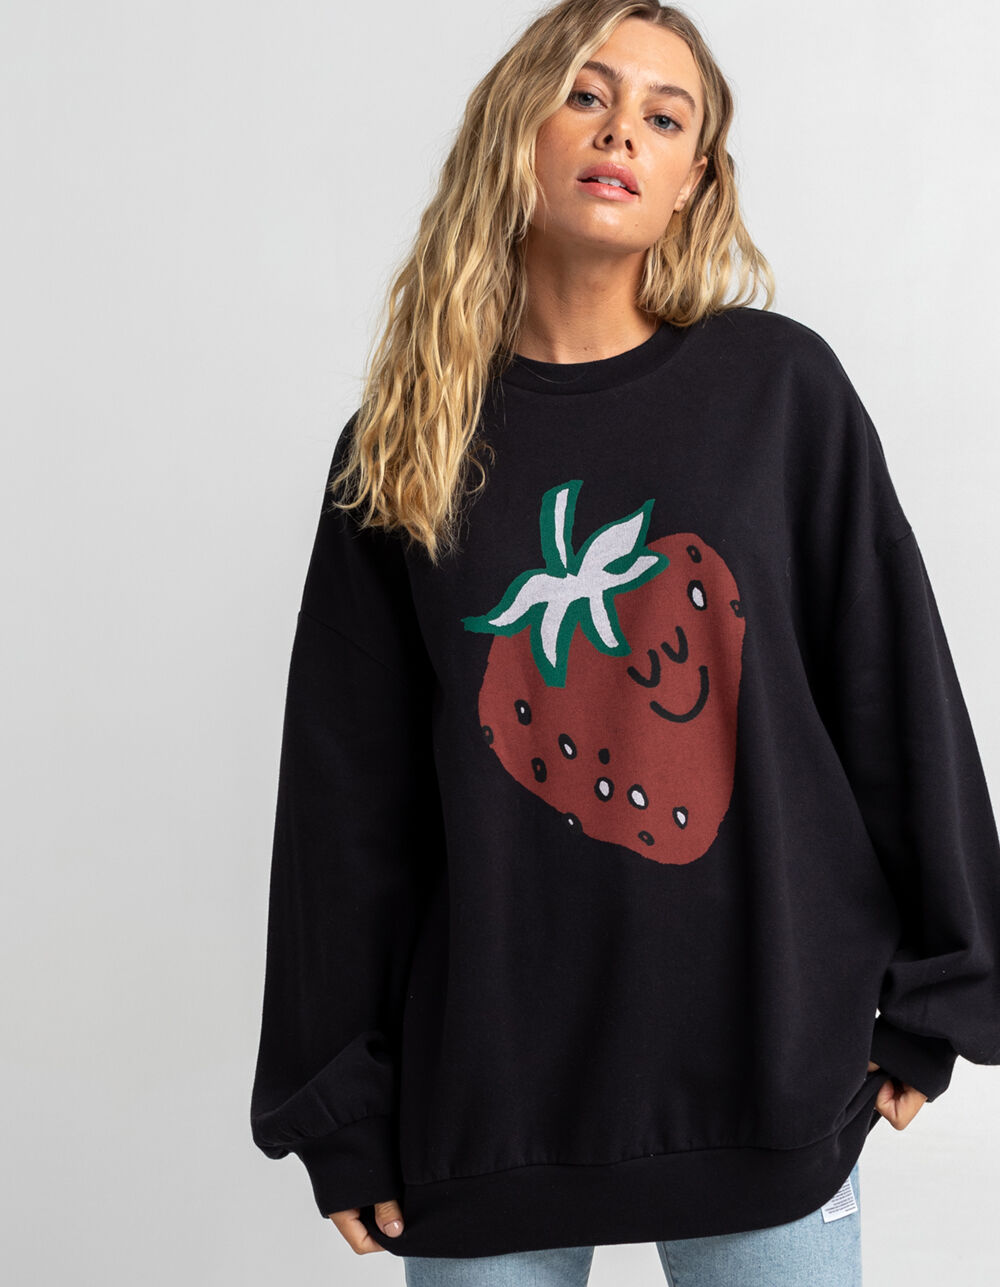 Introducir 83+ imagen levi’s strawberry sweatshirt